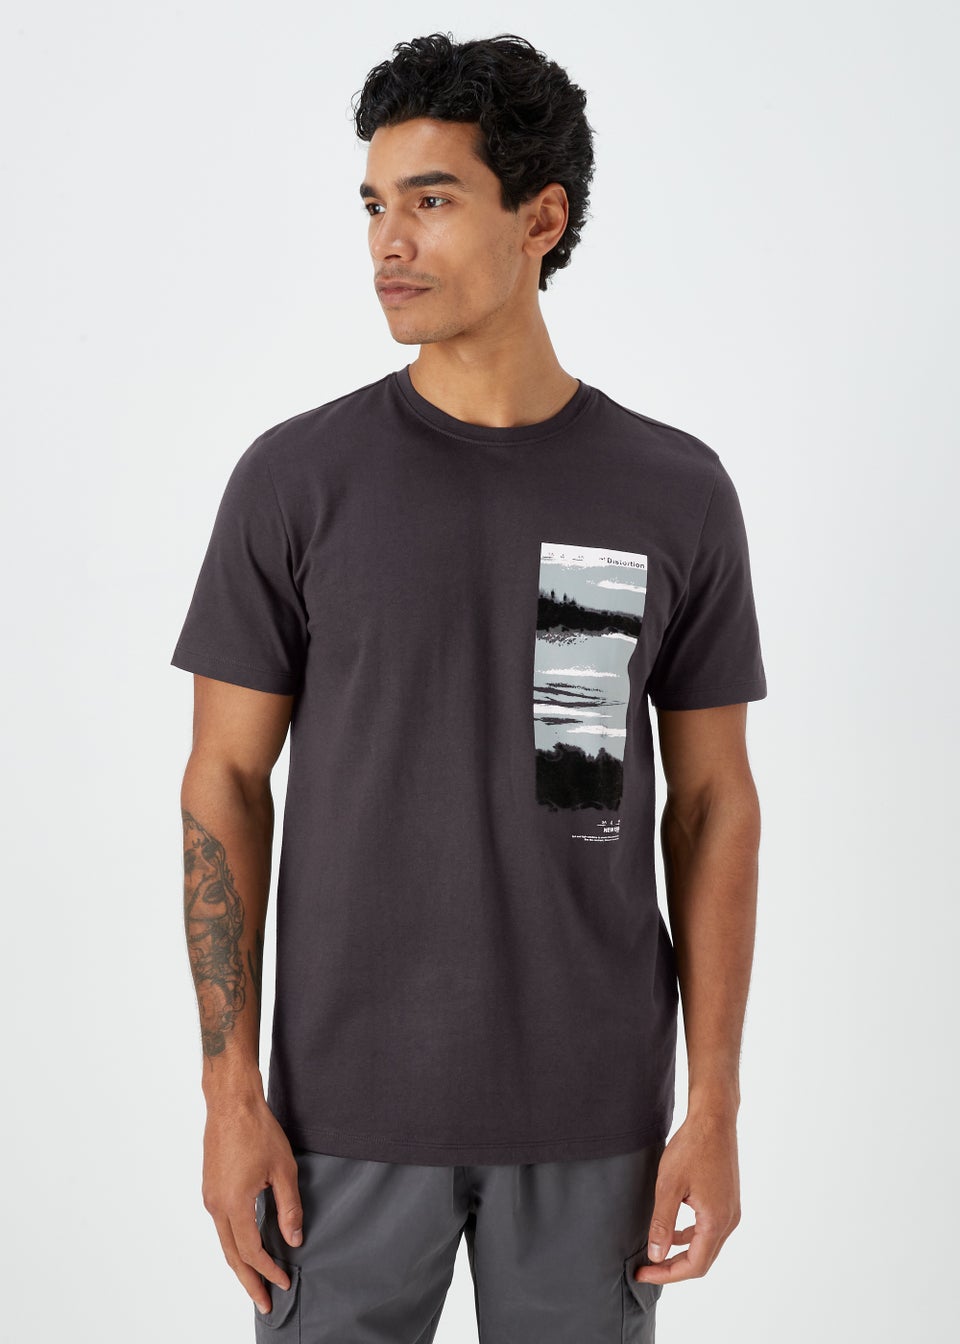 US Athletic Black Graphic T-Shirt